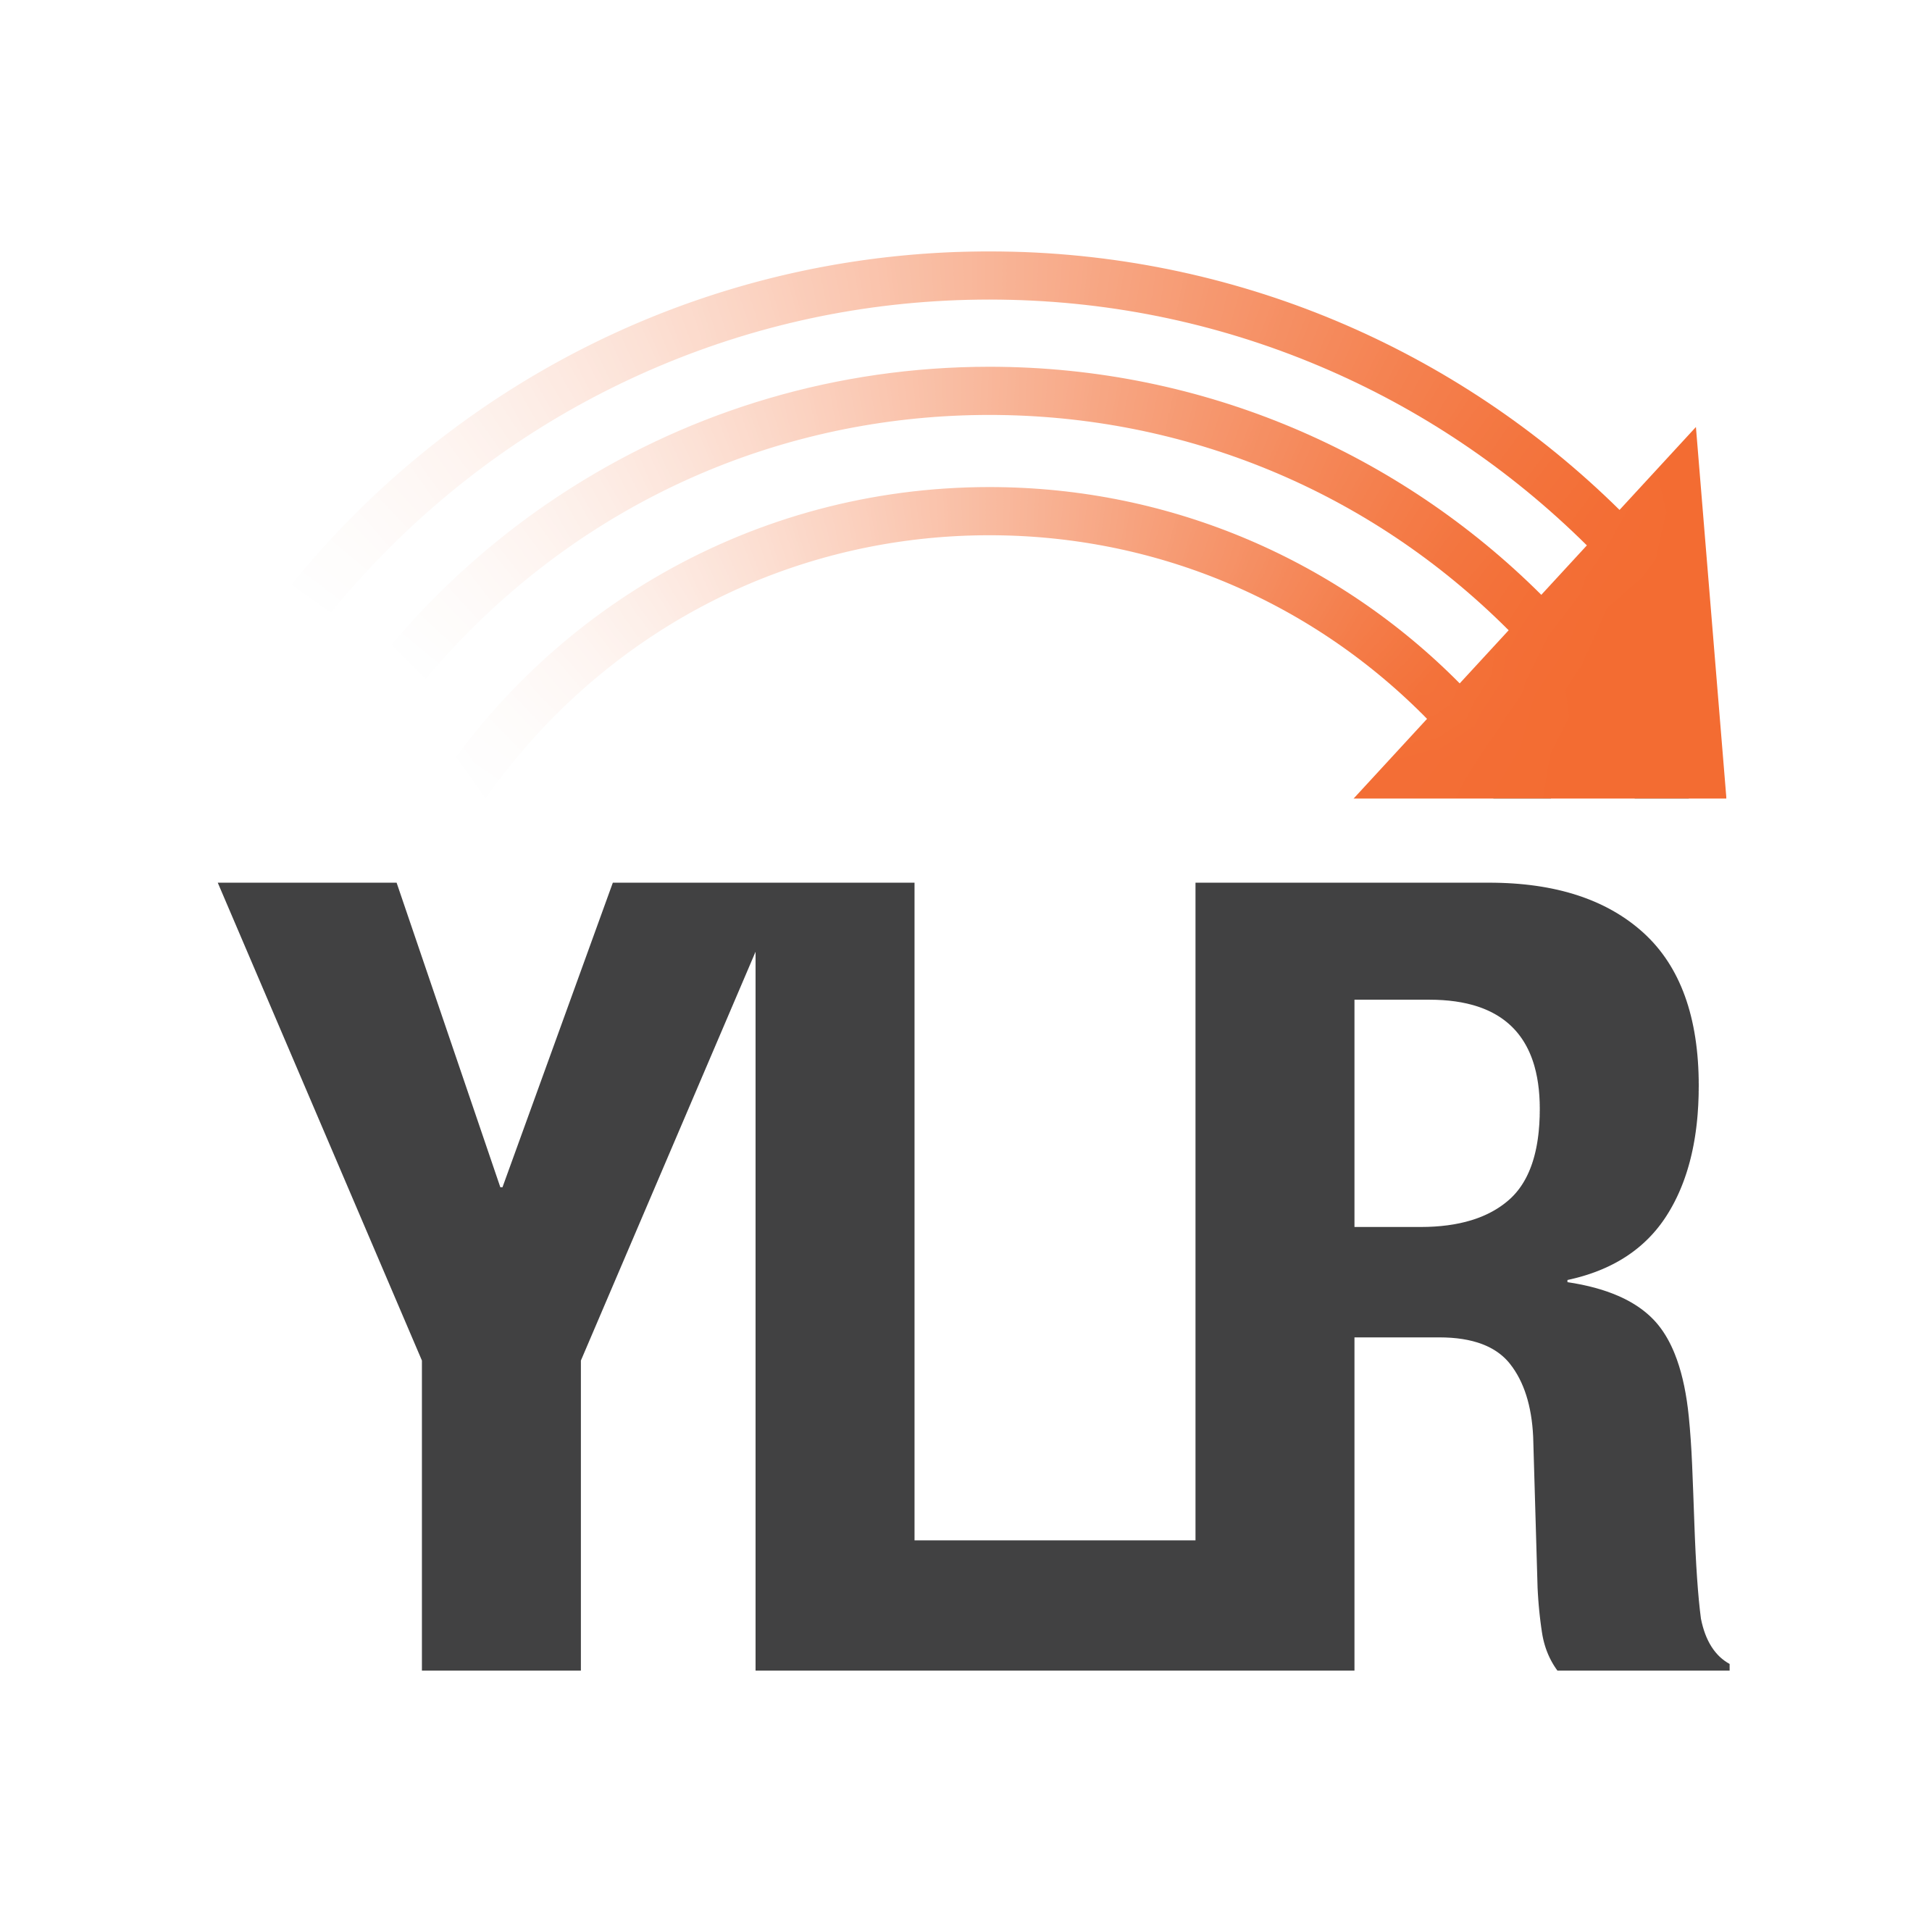 YLR logo